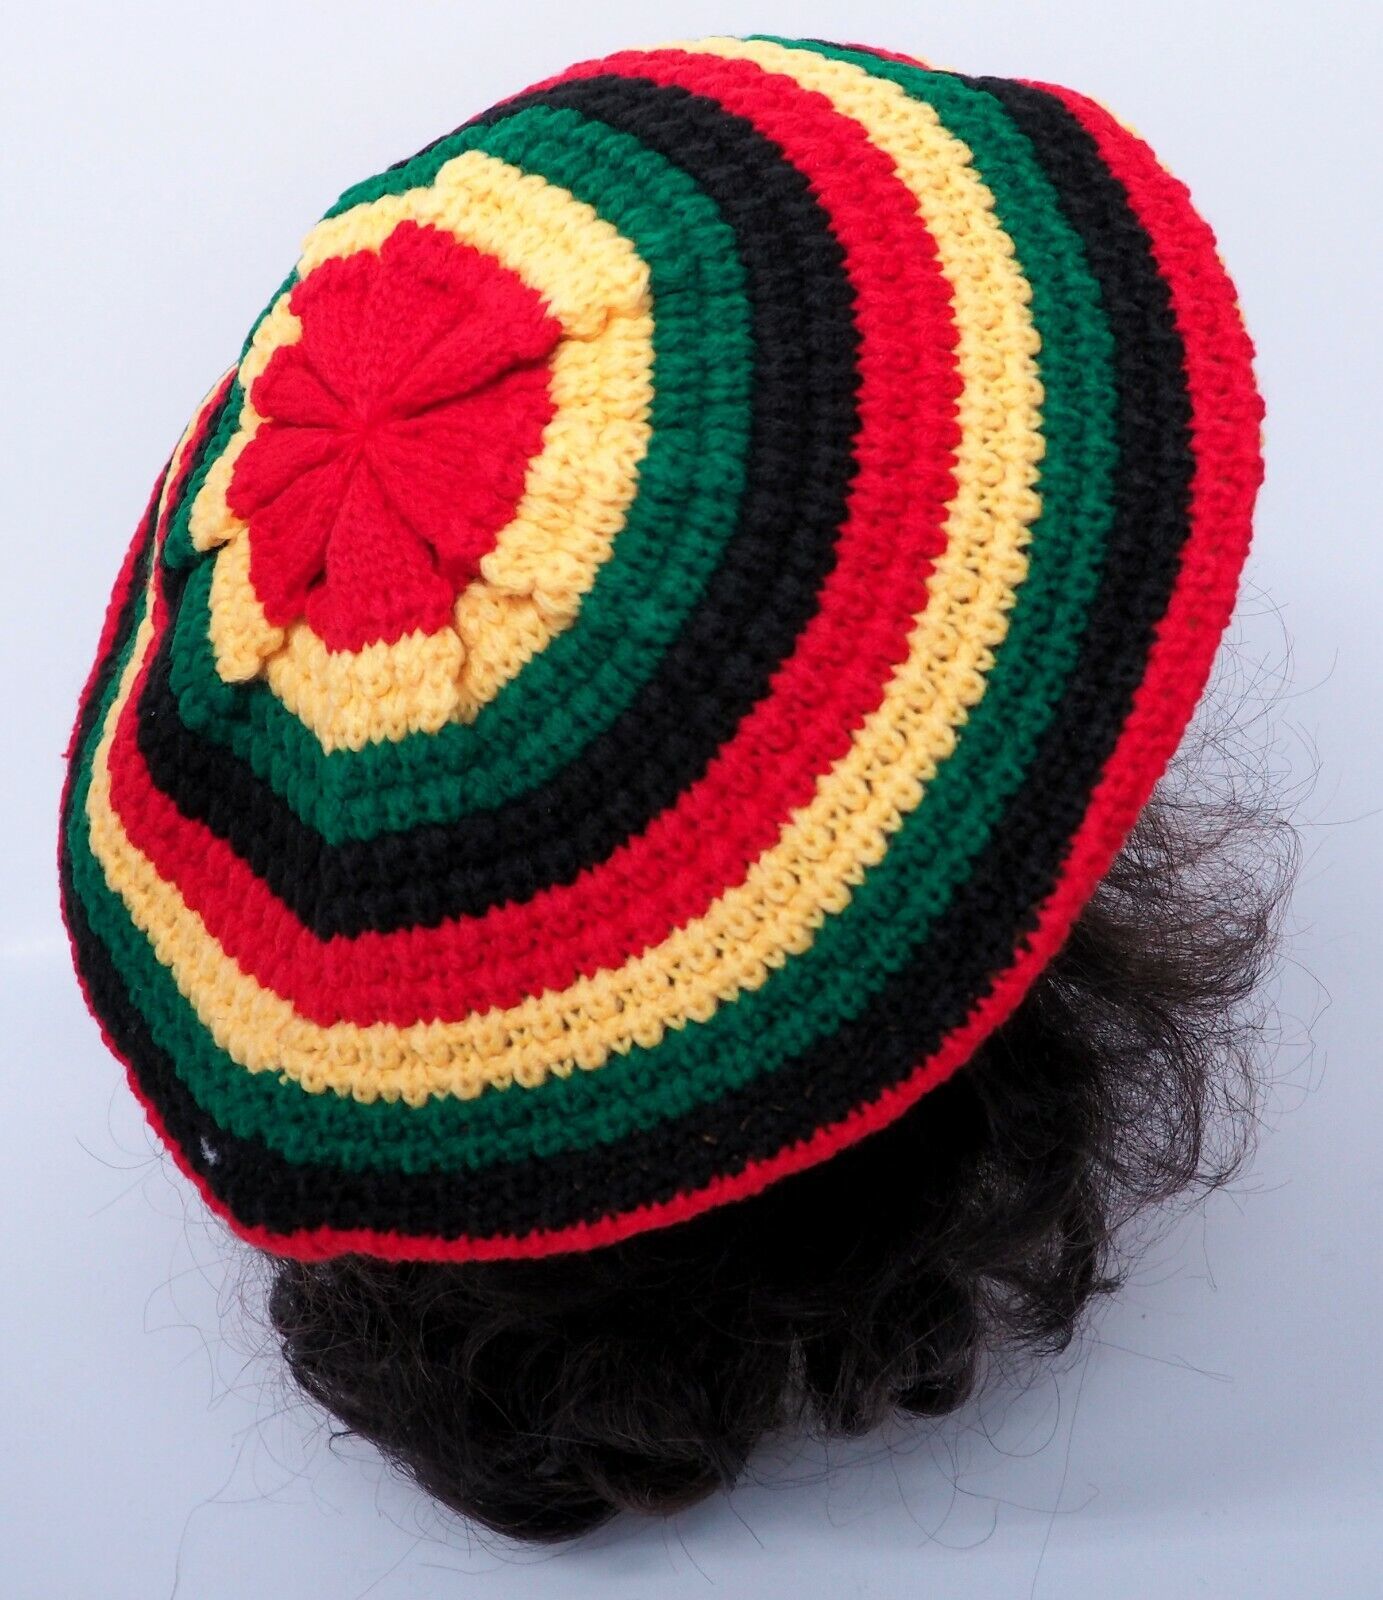 Honeywingz - Jamaica reggae rasta warm winter knit crochet beret braided baggy beanie hat cap